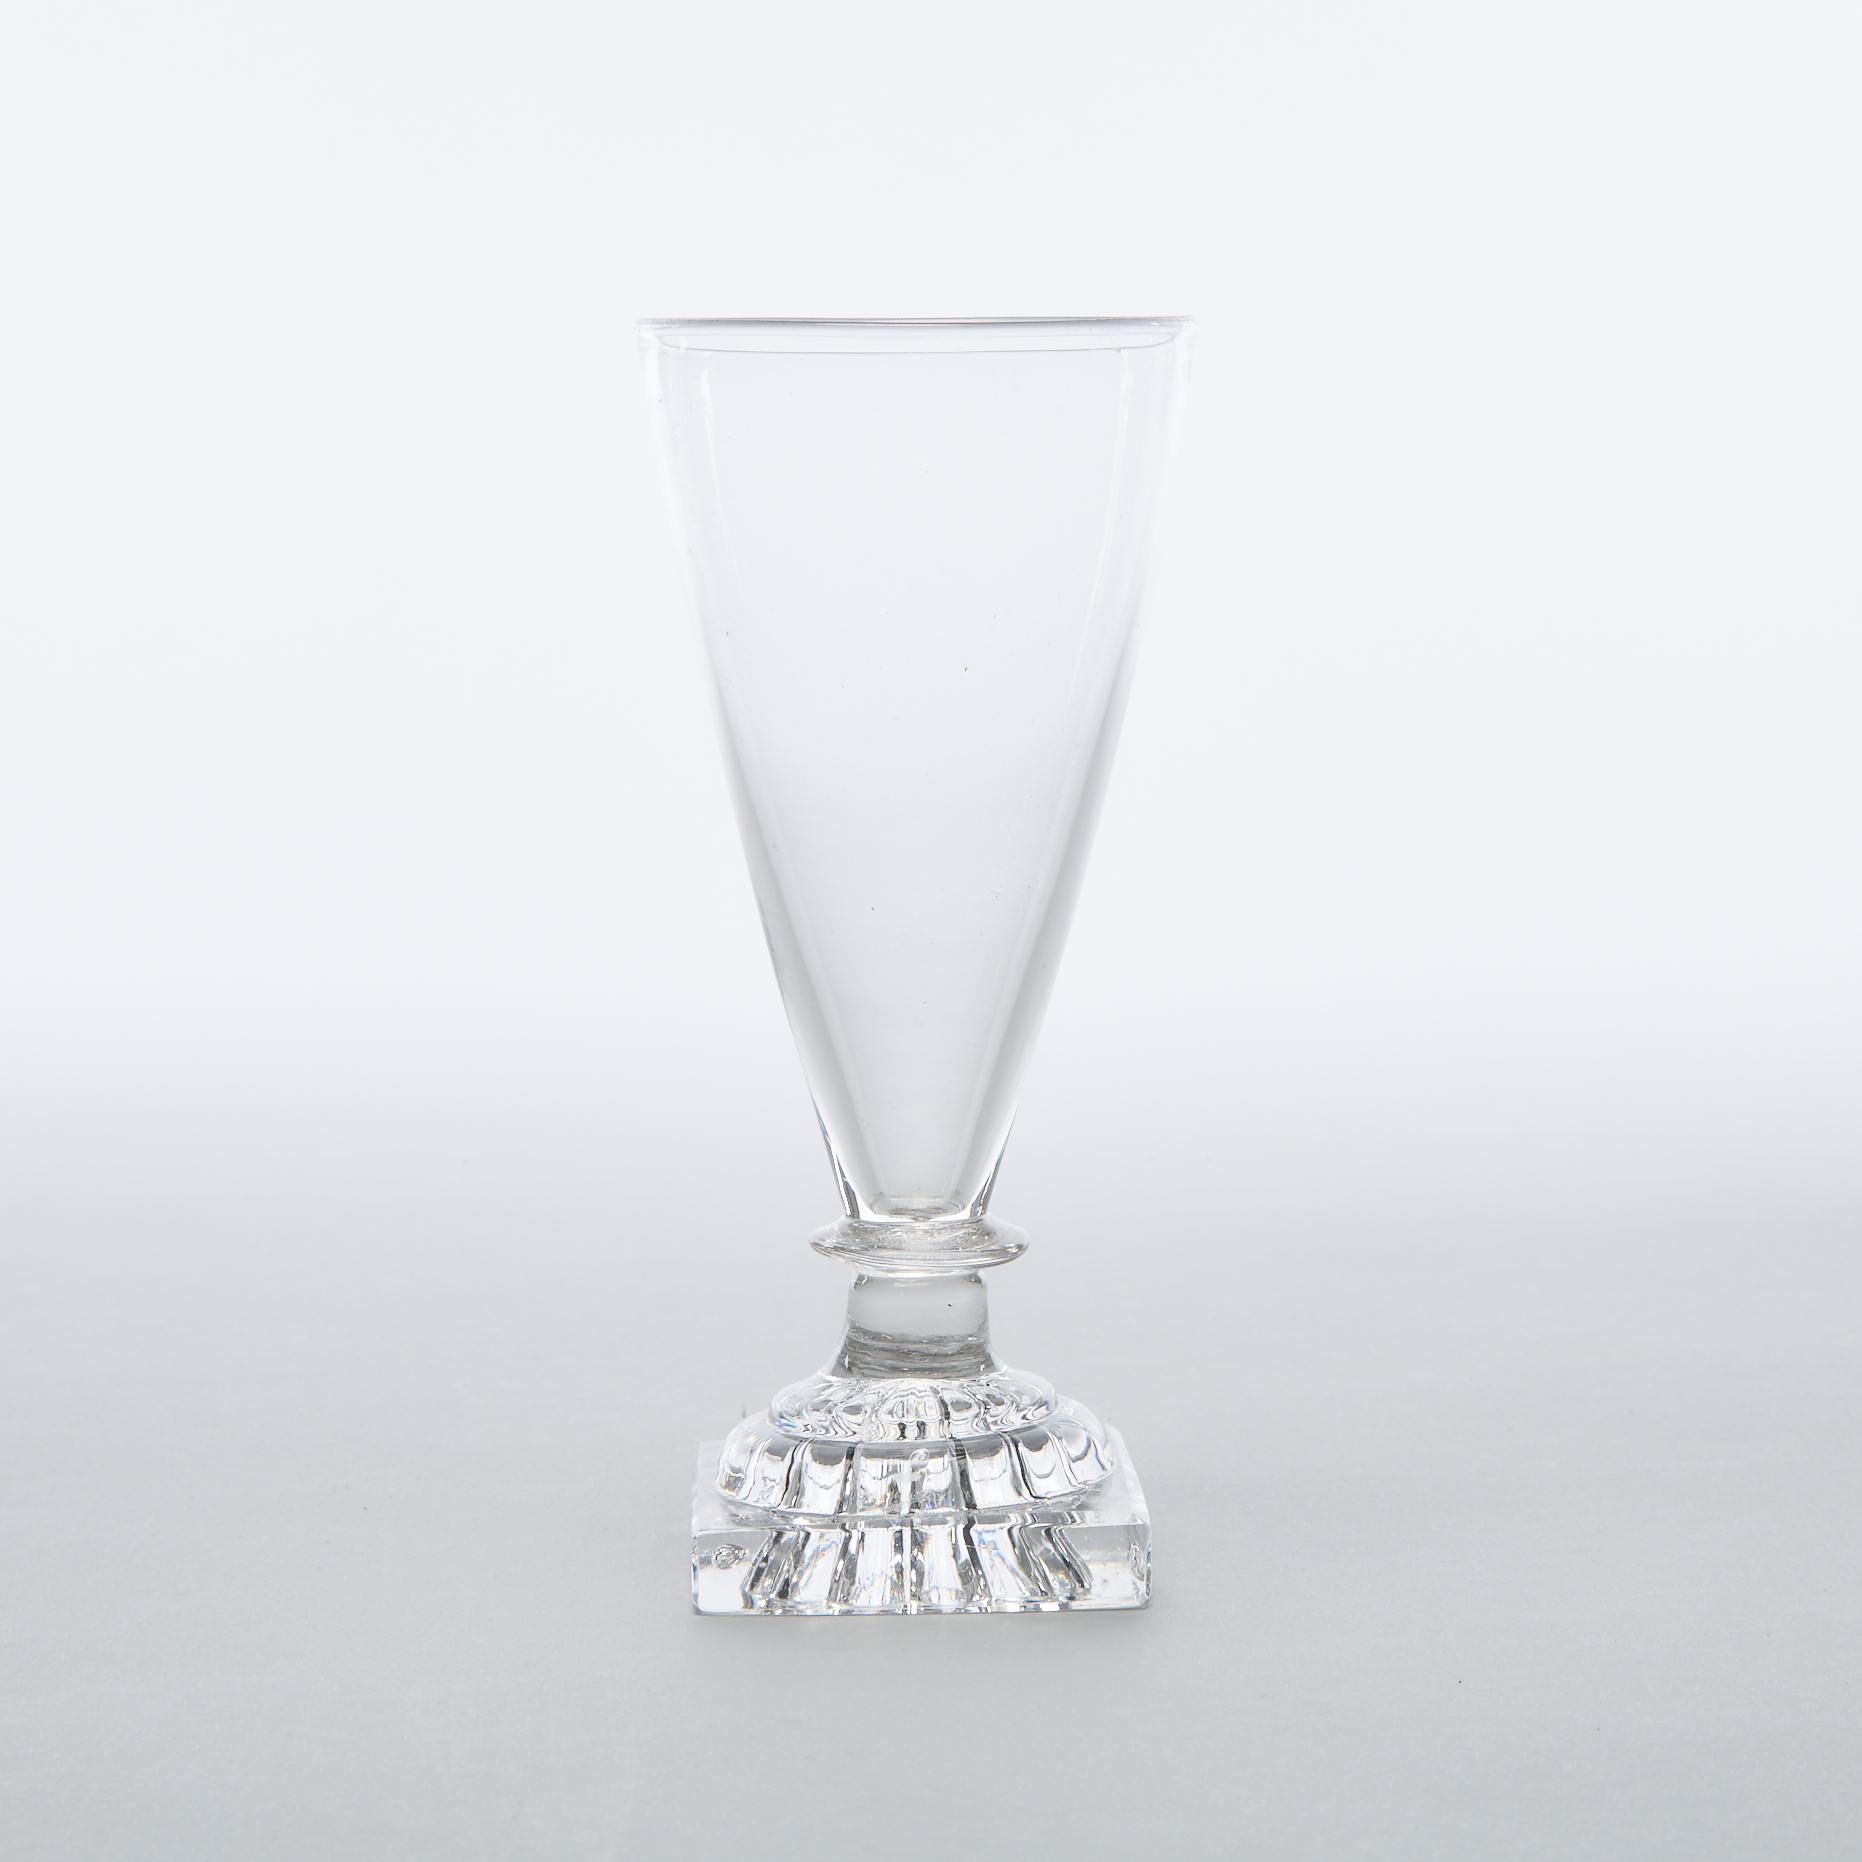 English Dwarf Ale Glass, early 19th century